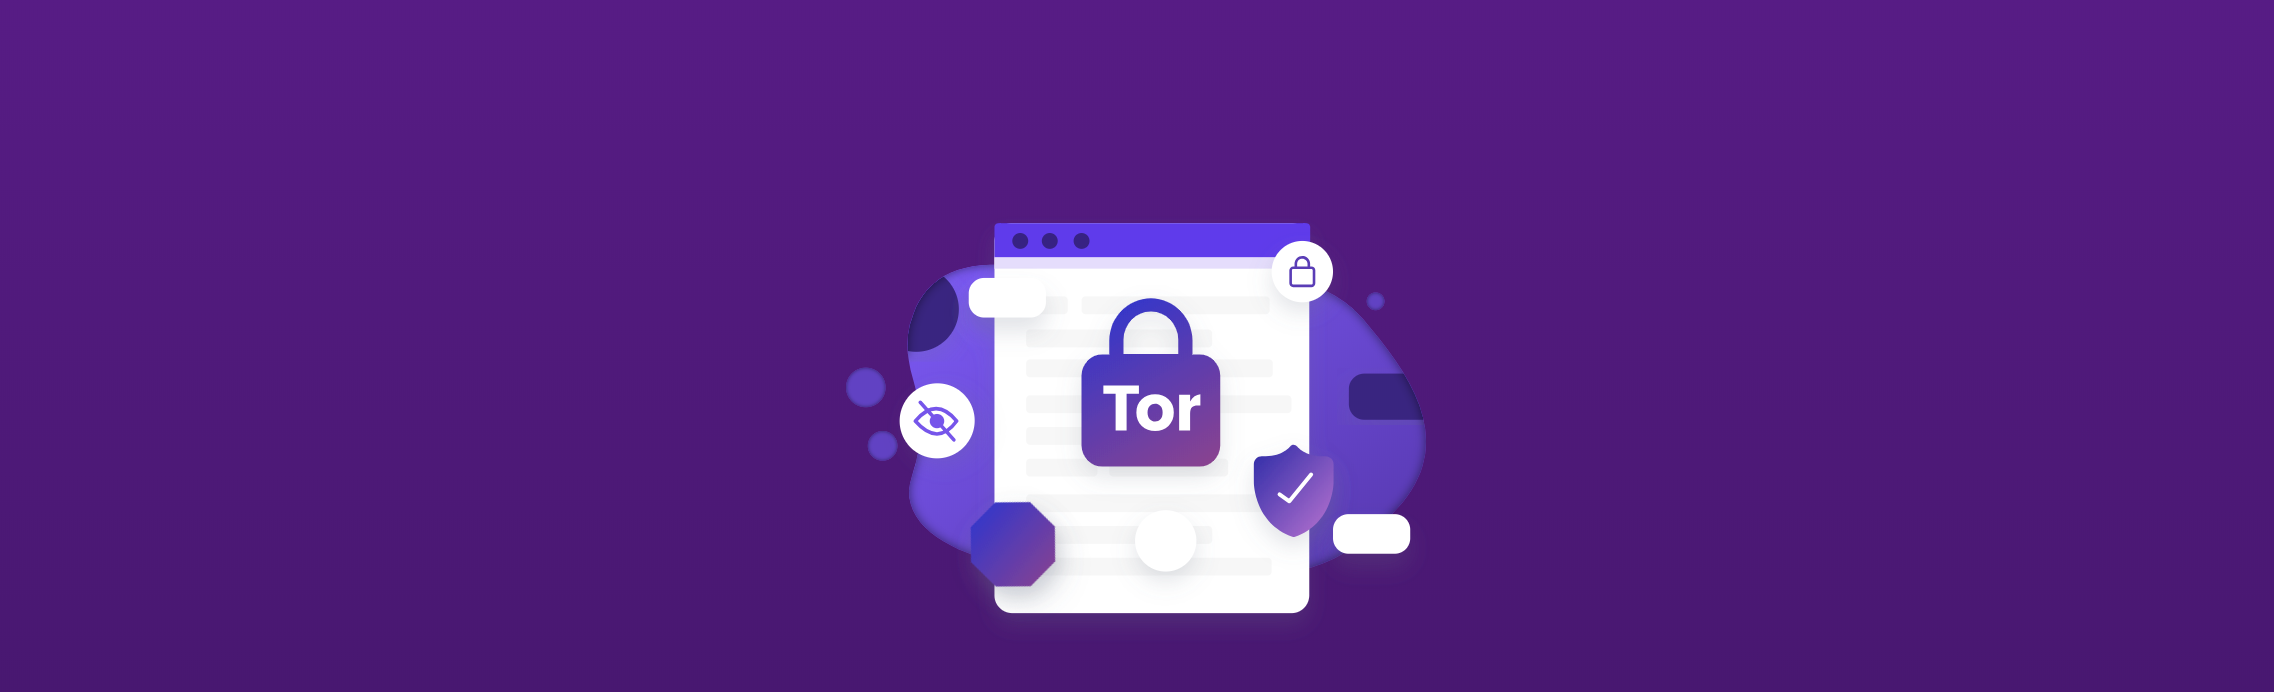 What is the use of tor browser mega поменять язык в тор браузере mega